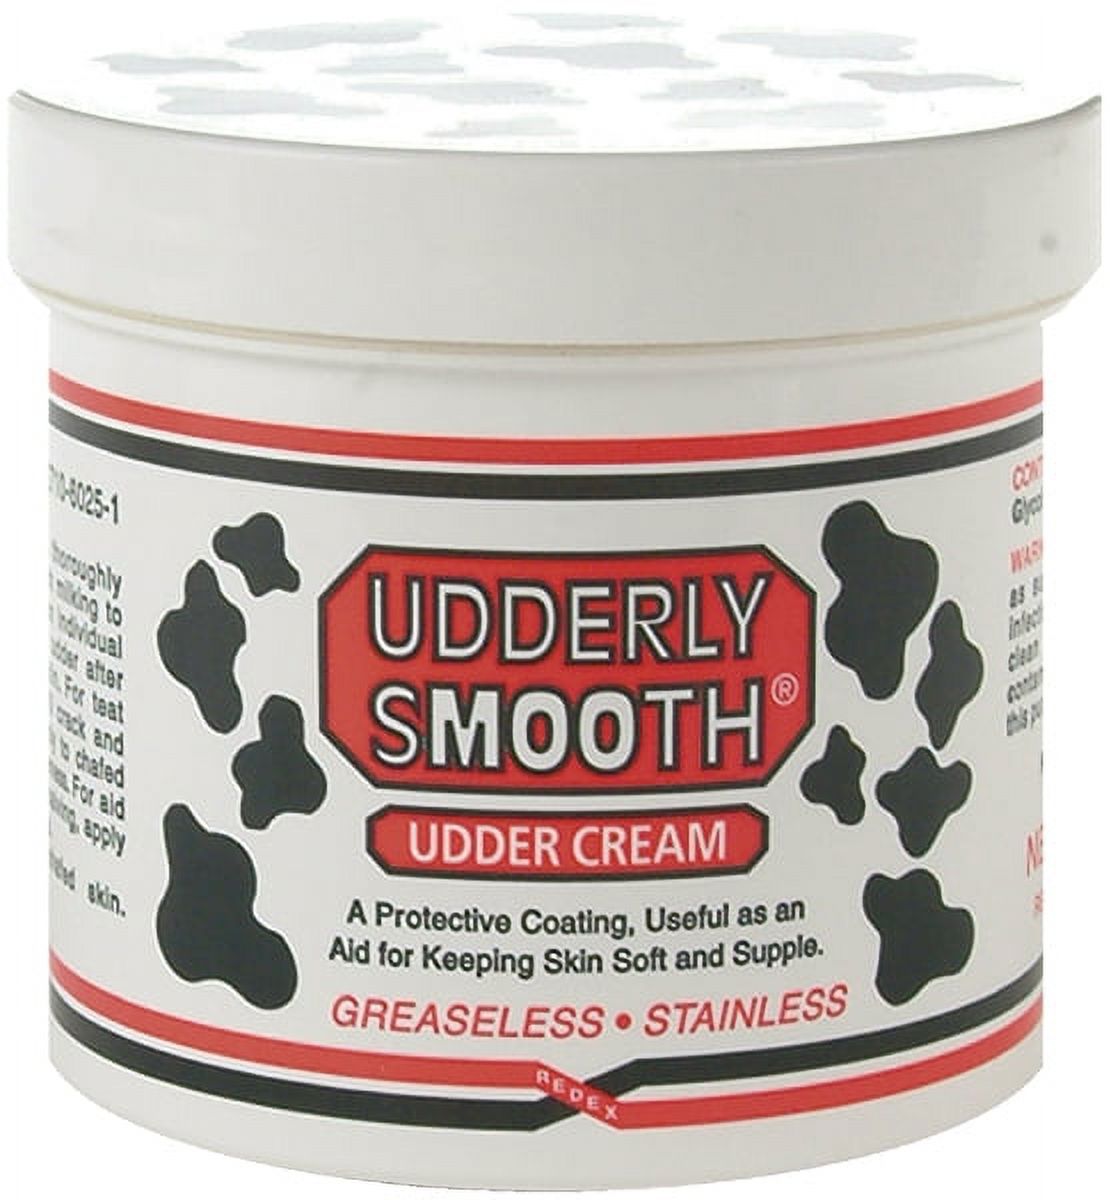 Udderly Smooth Body Cream 10 oz - image 1 of 5